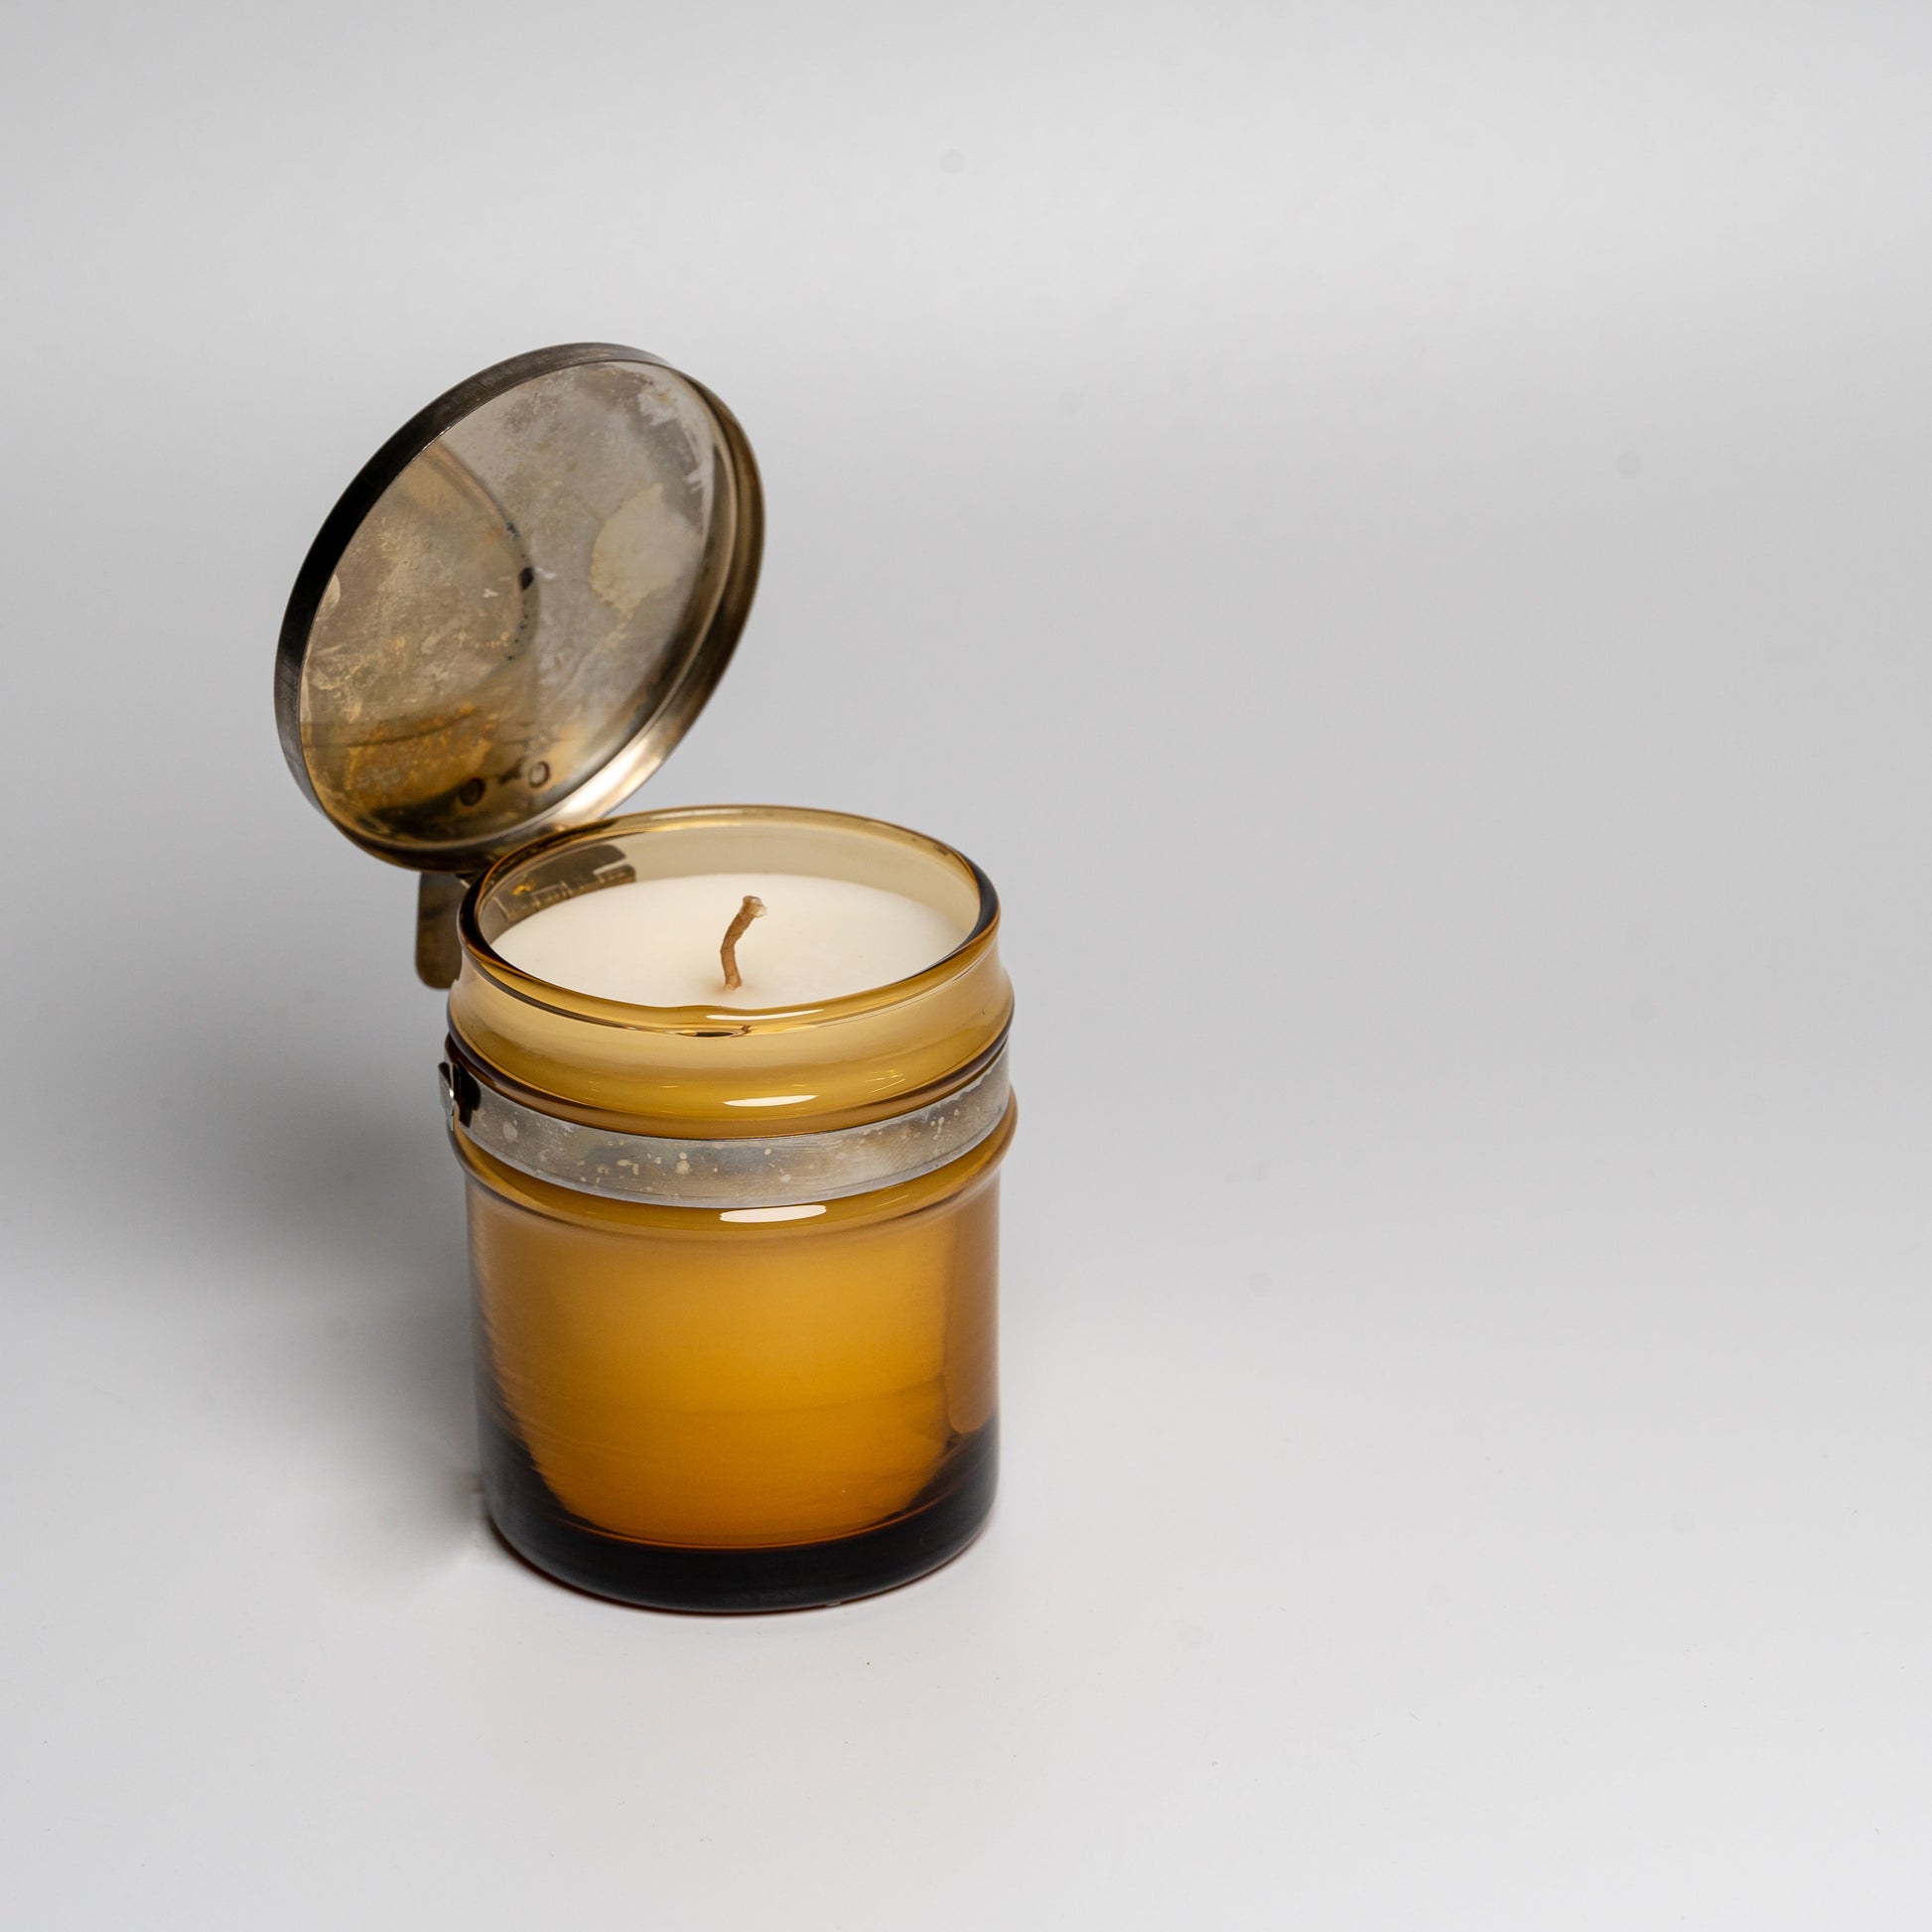 A Cul de Sac hiba wood candle in a glass jar on a white background